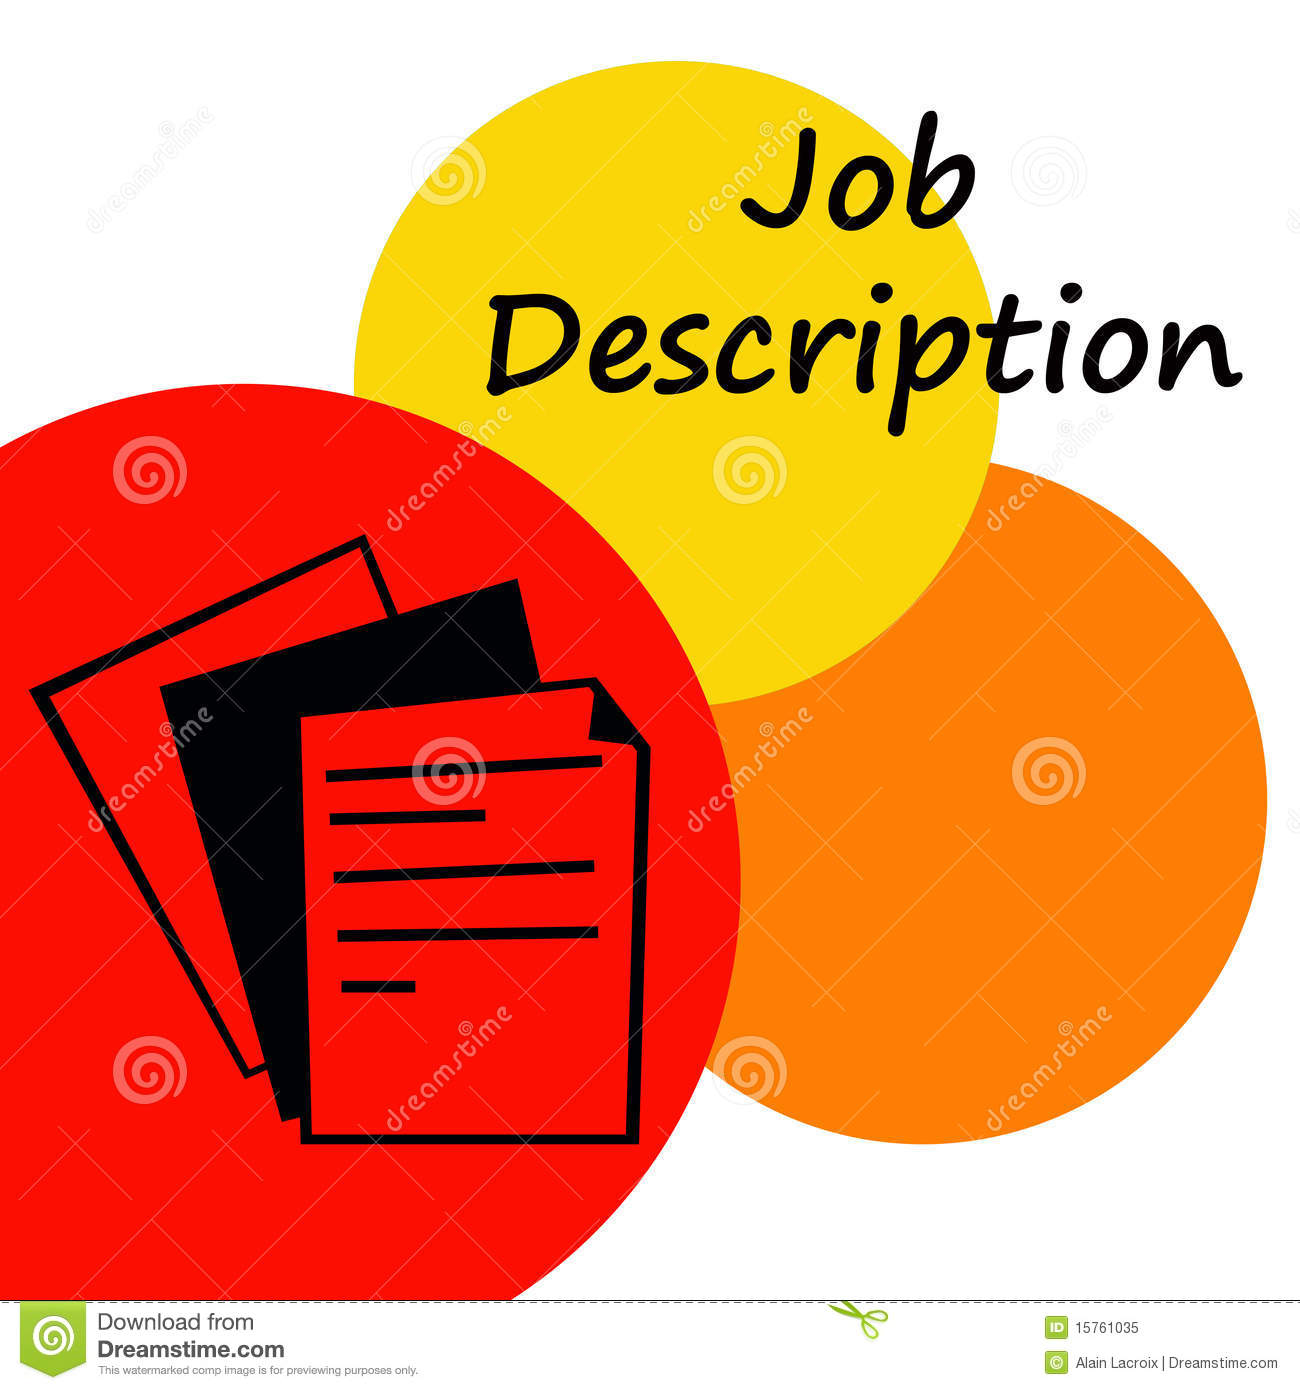 Job Description Clipart Job Description For Going To A